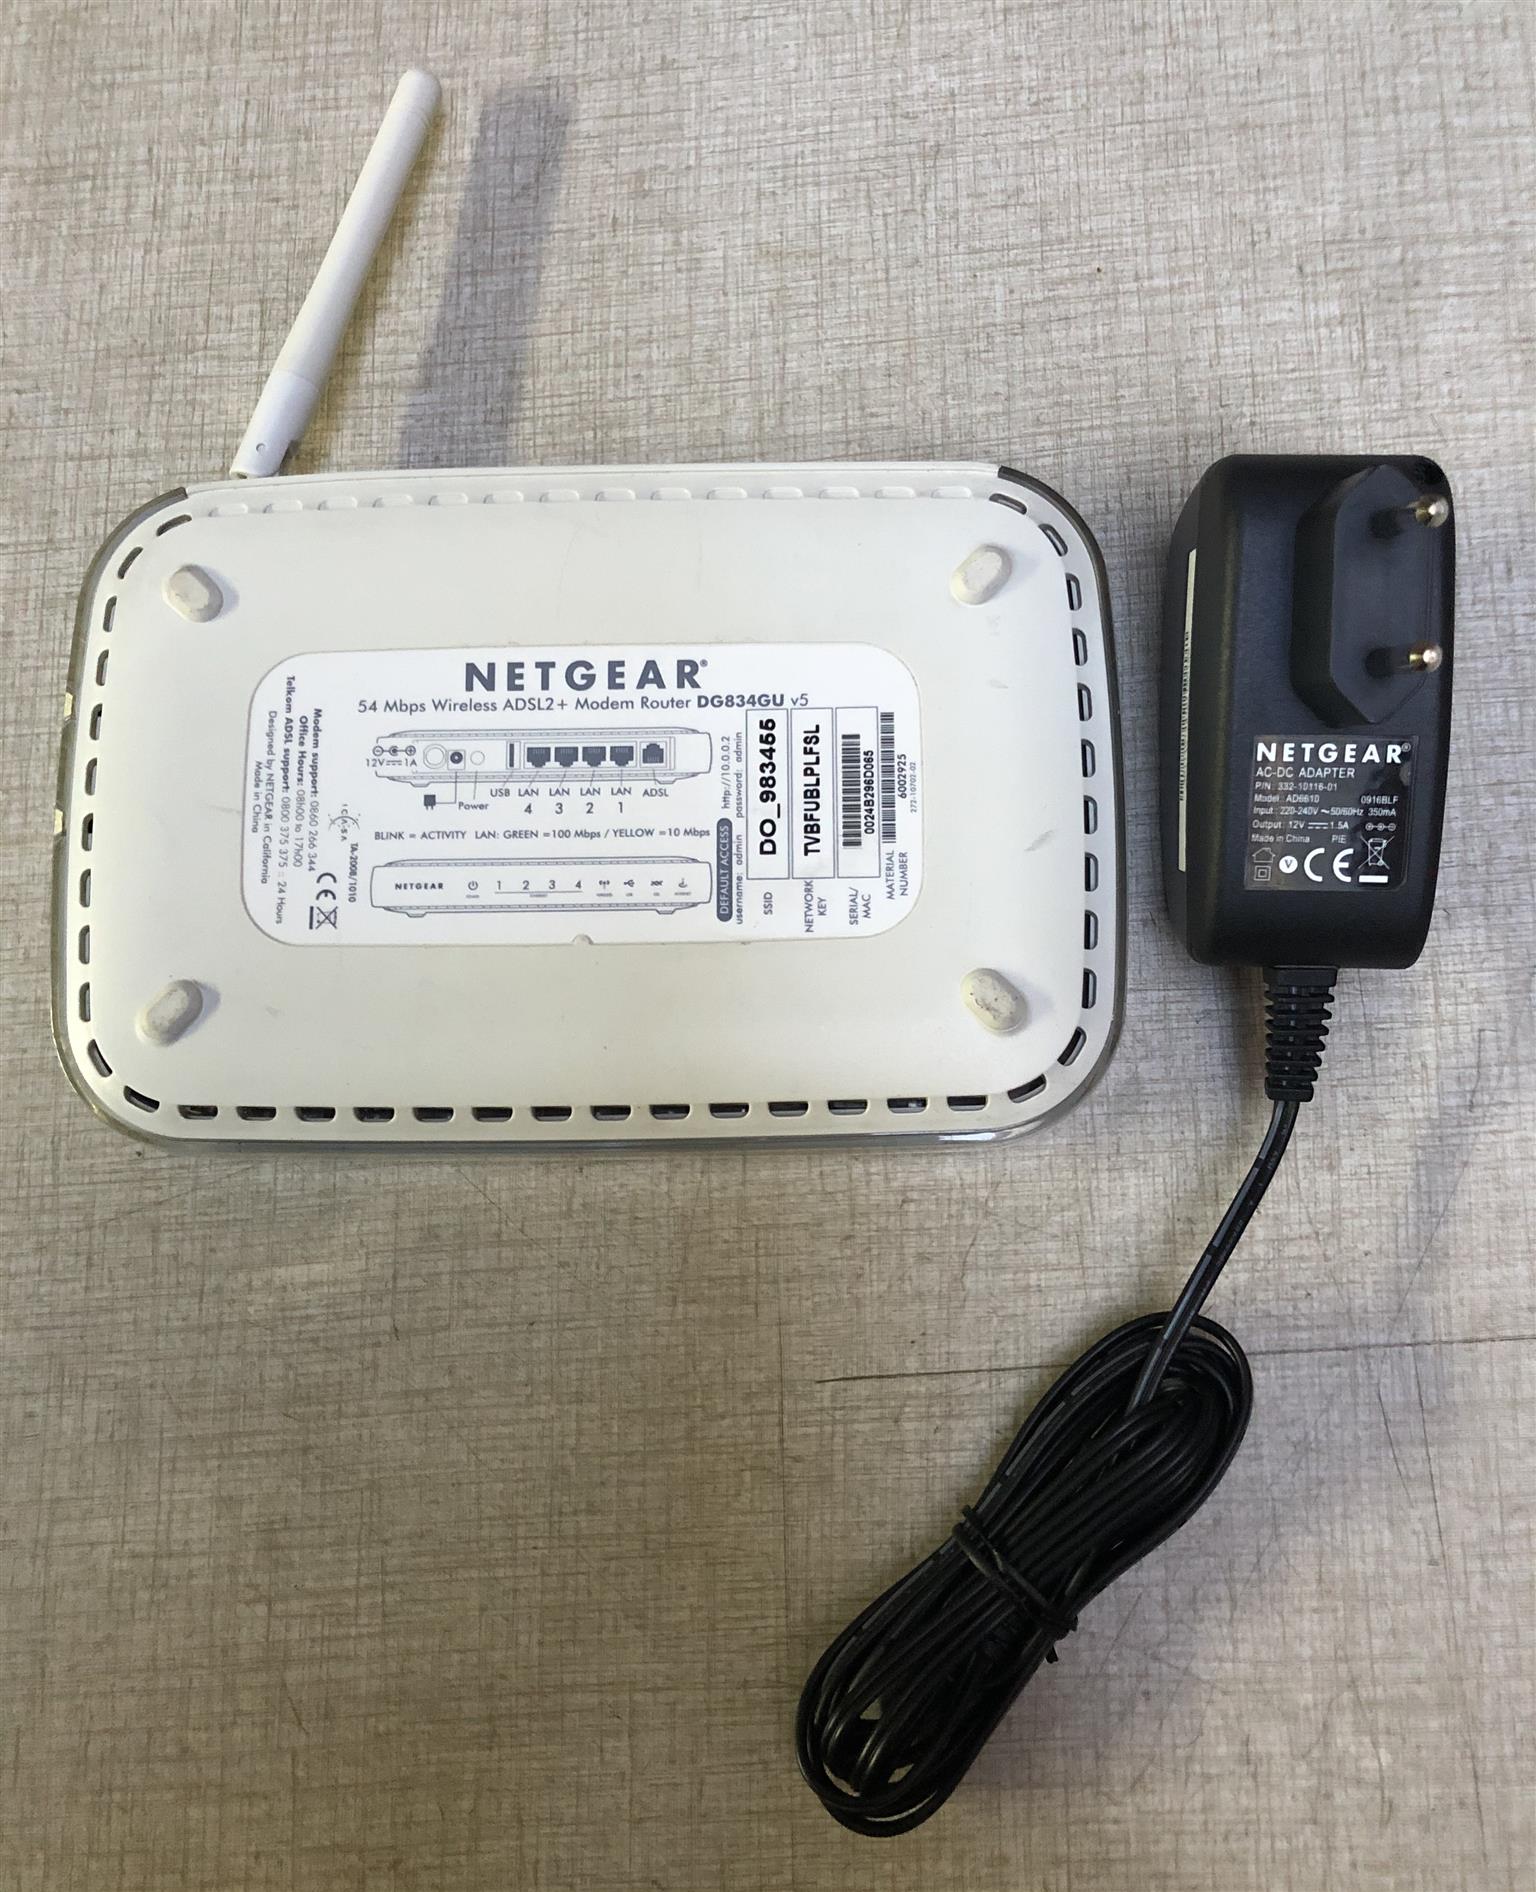 Netgear DG834GU Wi-Fi ADSL internet router